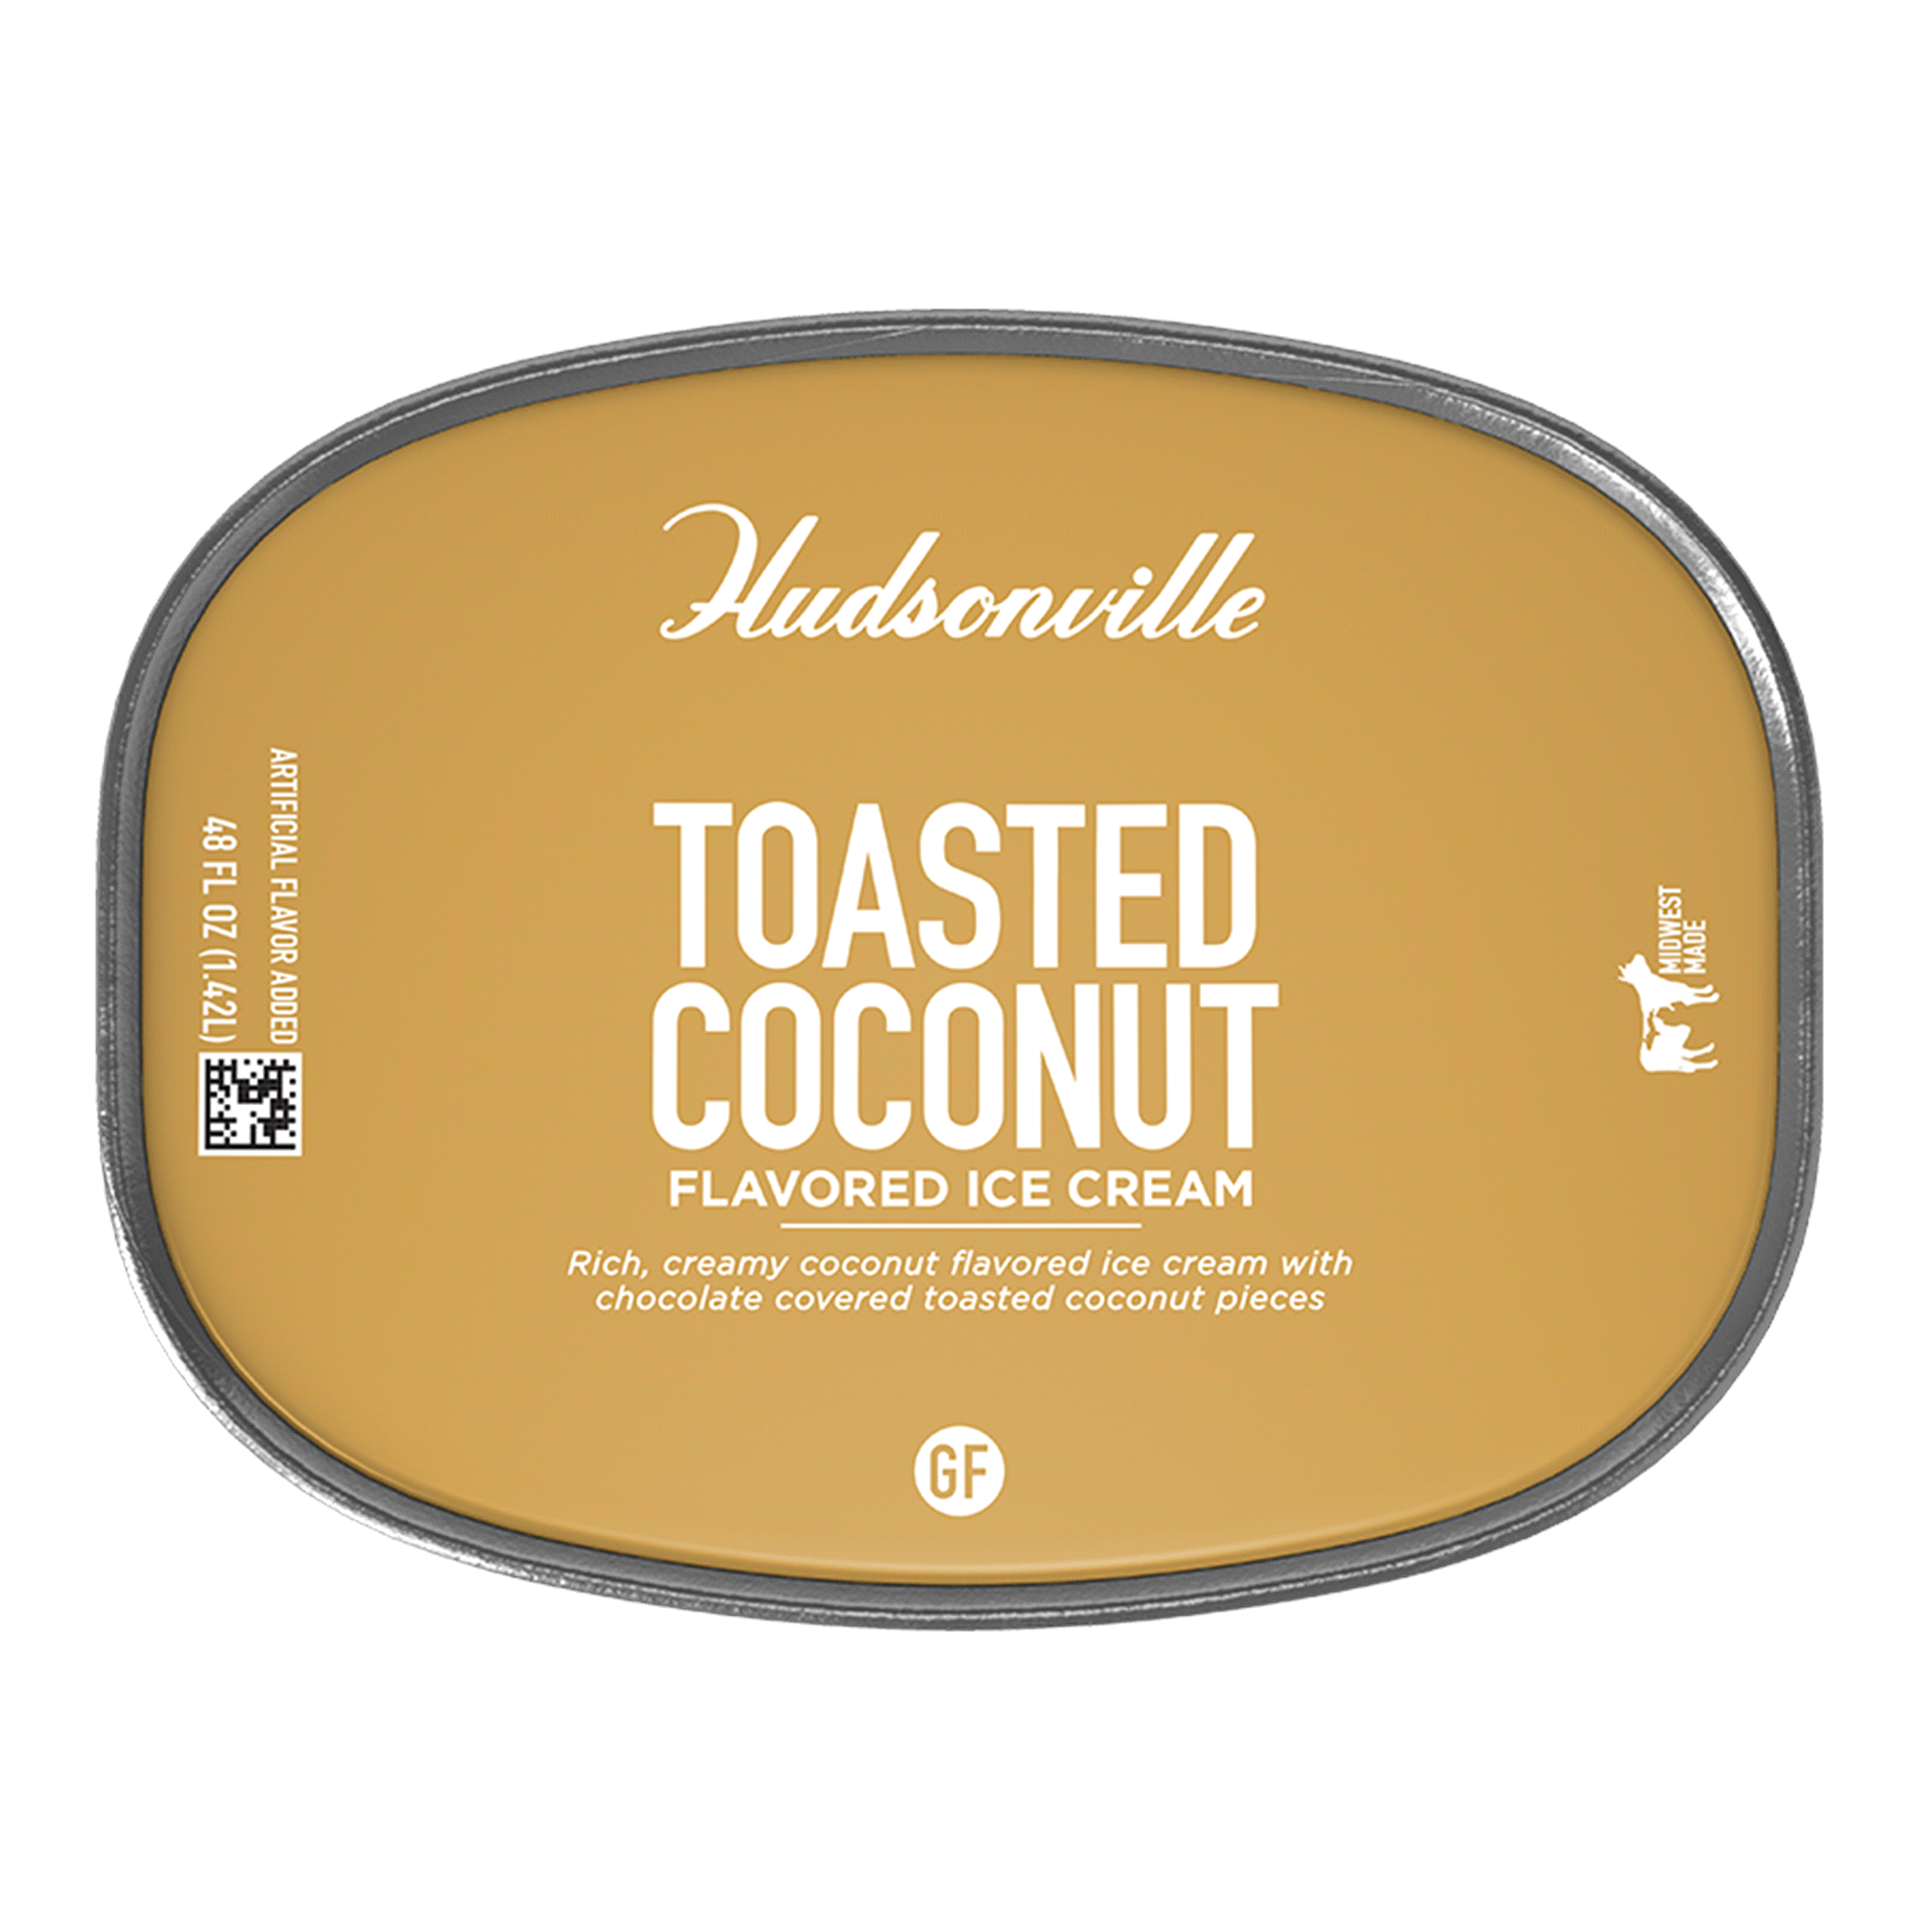 Toasted Coconut 48 oz - Hudsonville Ice Cream